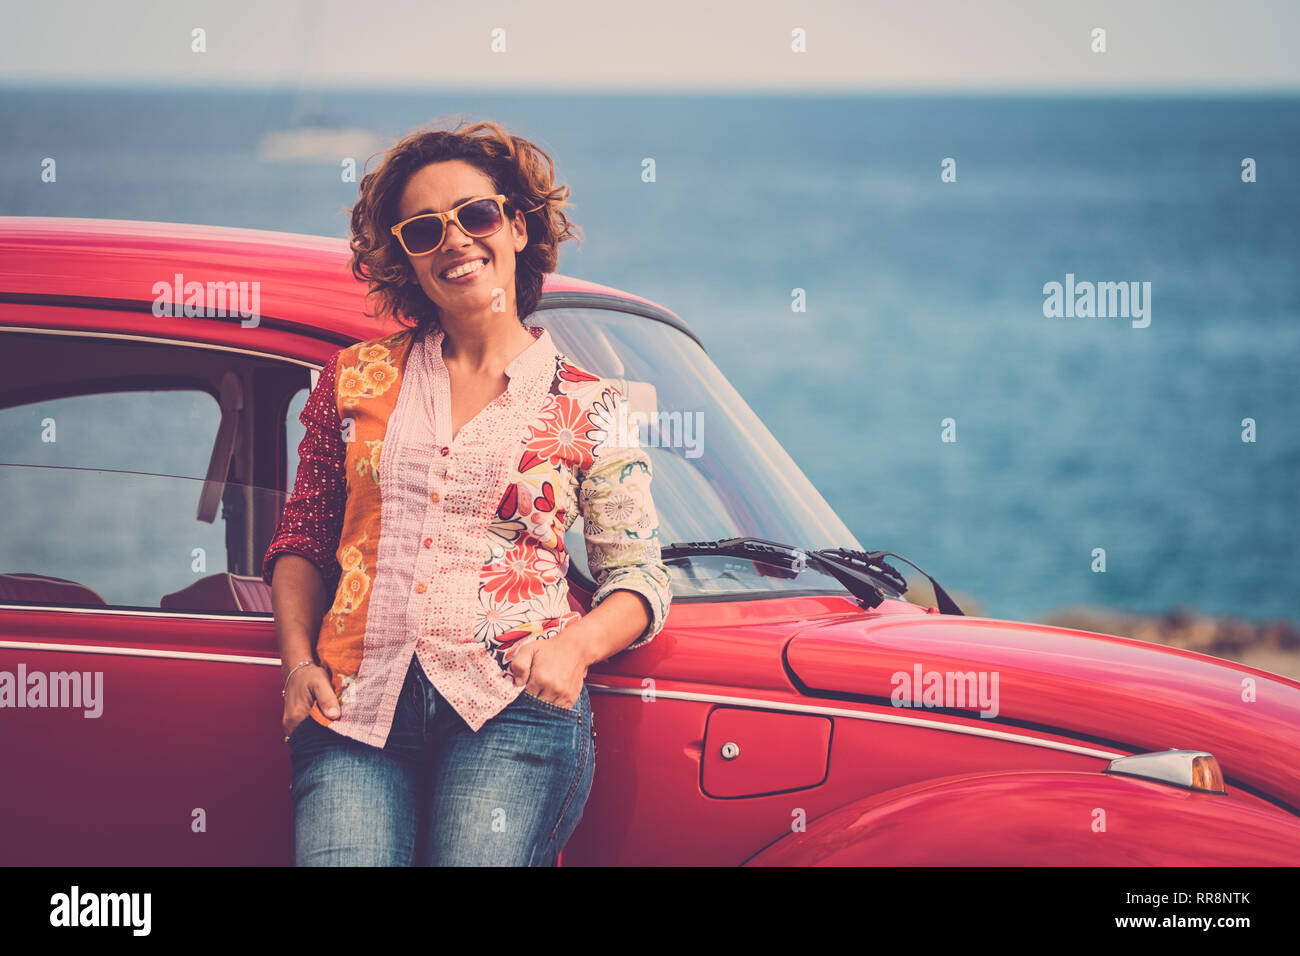 Woman pose near retro car stock photo. Image of female - 99099488